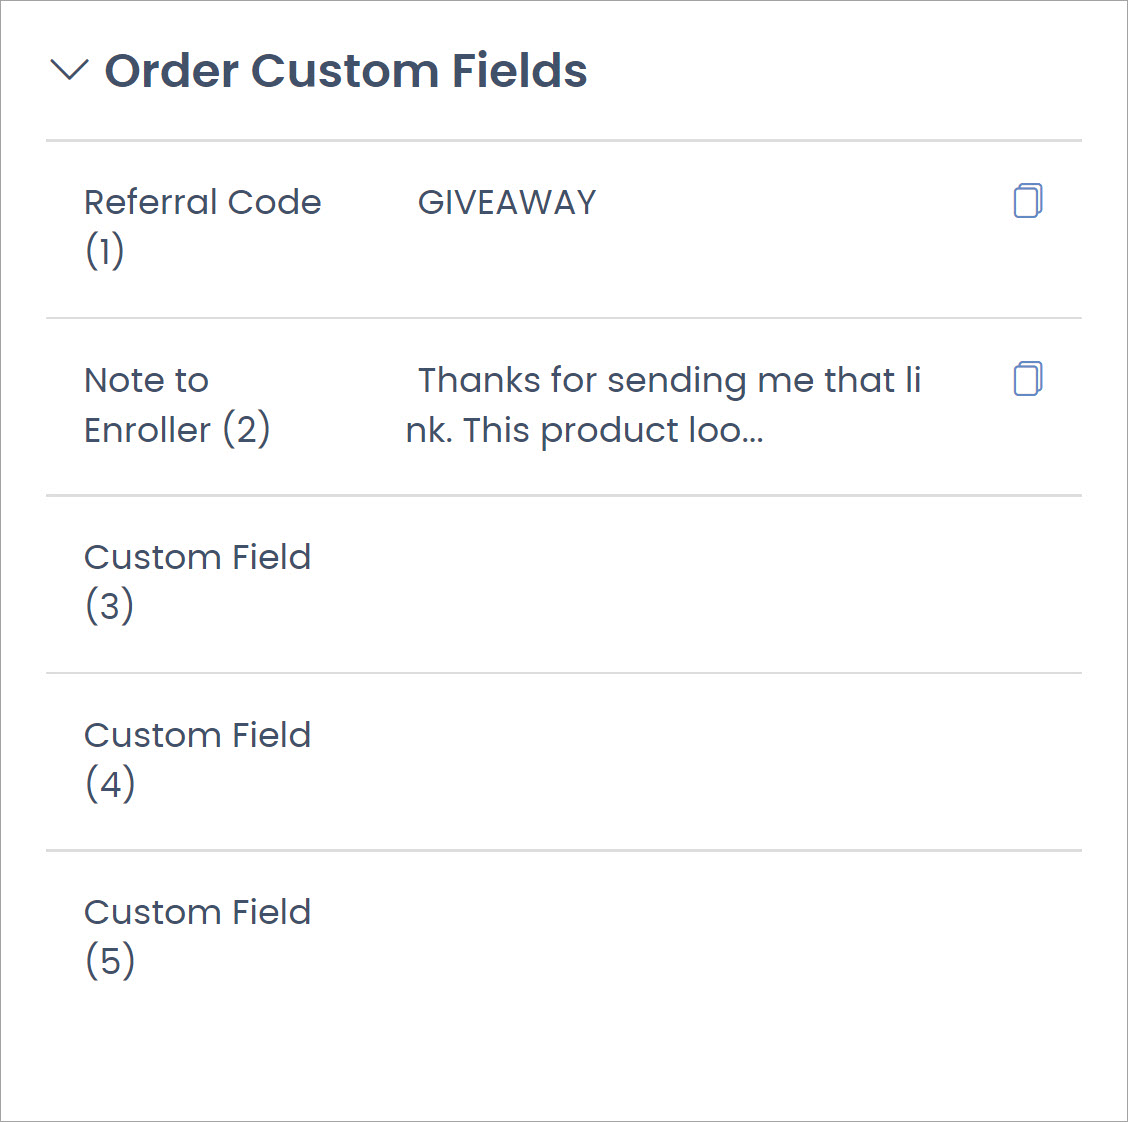 Order Custom Fields